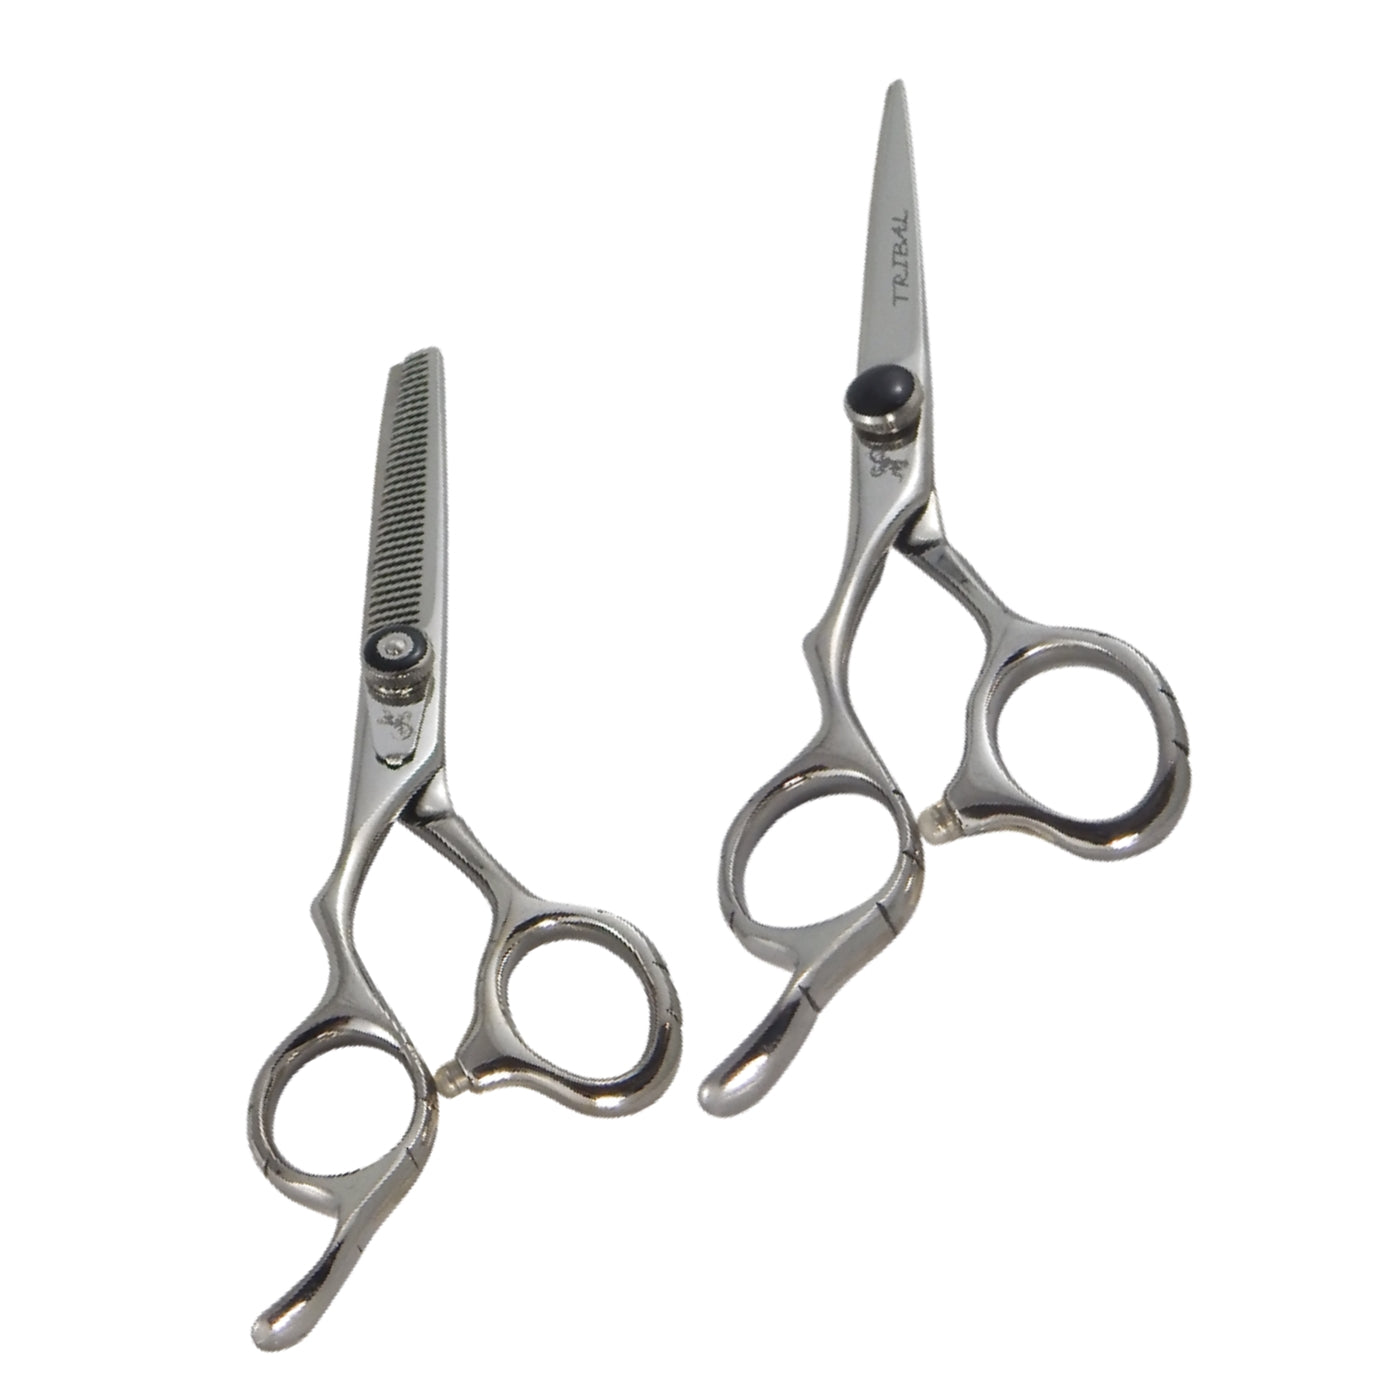 5, 5.5, 6, 6.5 or 7 ST5 Hair Cutting Scissor